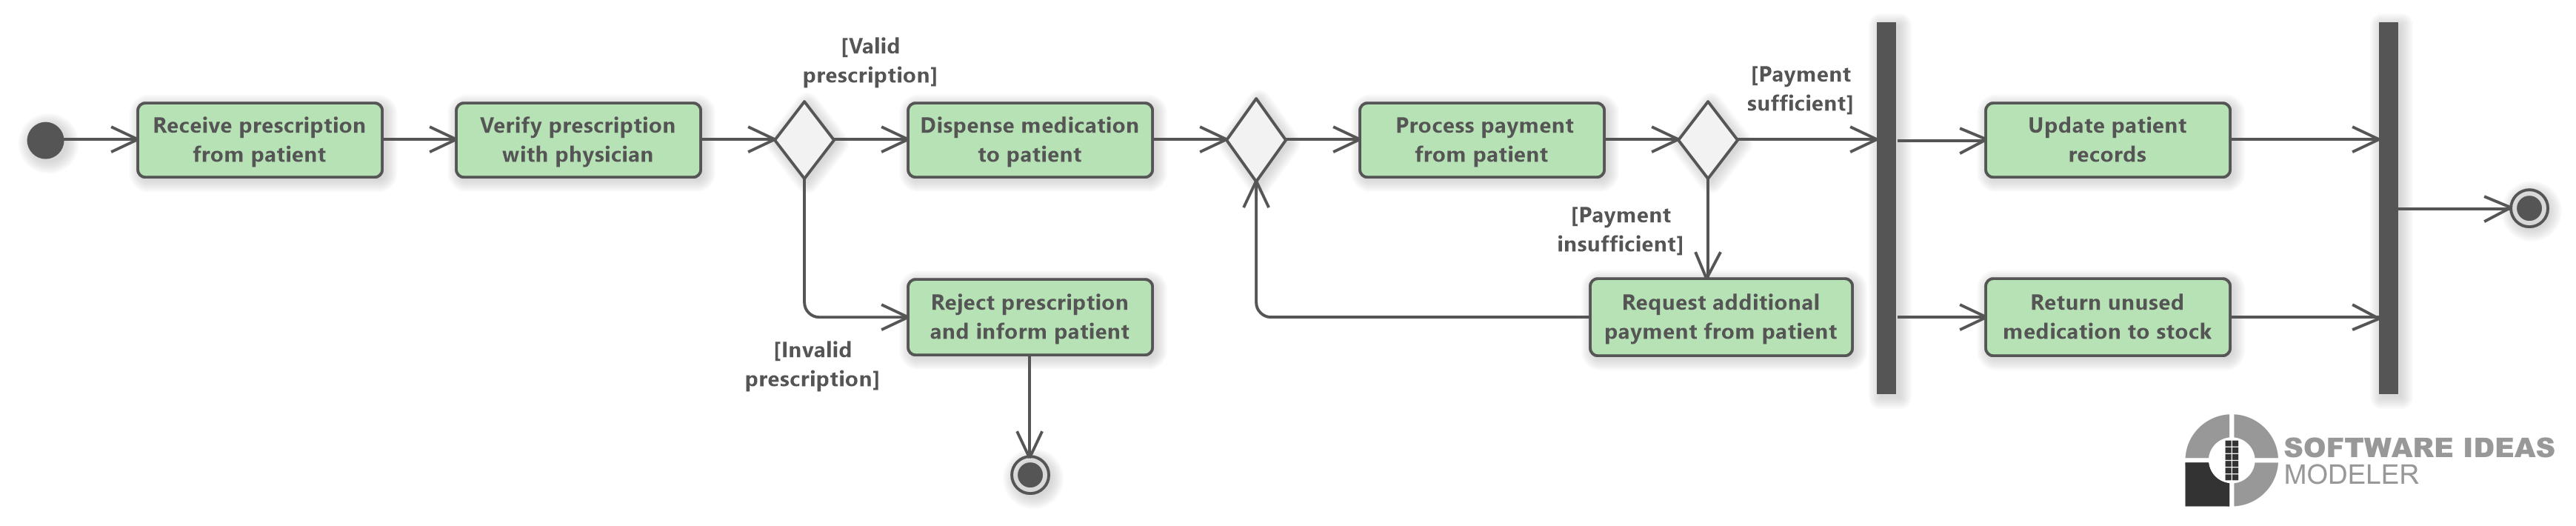 Pharmacy Process Flow (UML Activity Diagram)